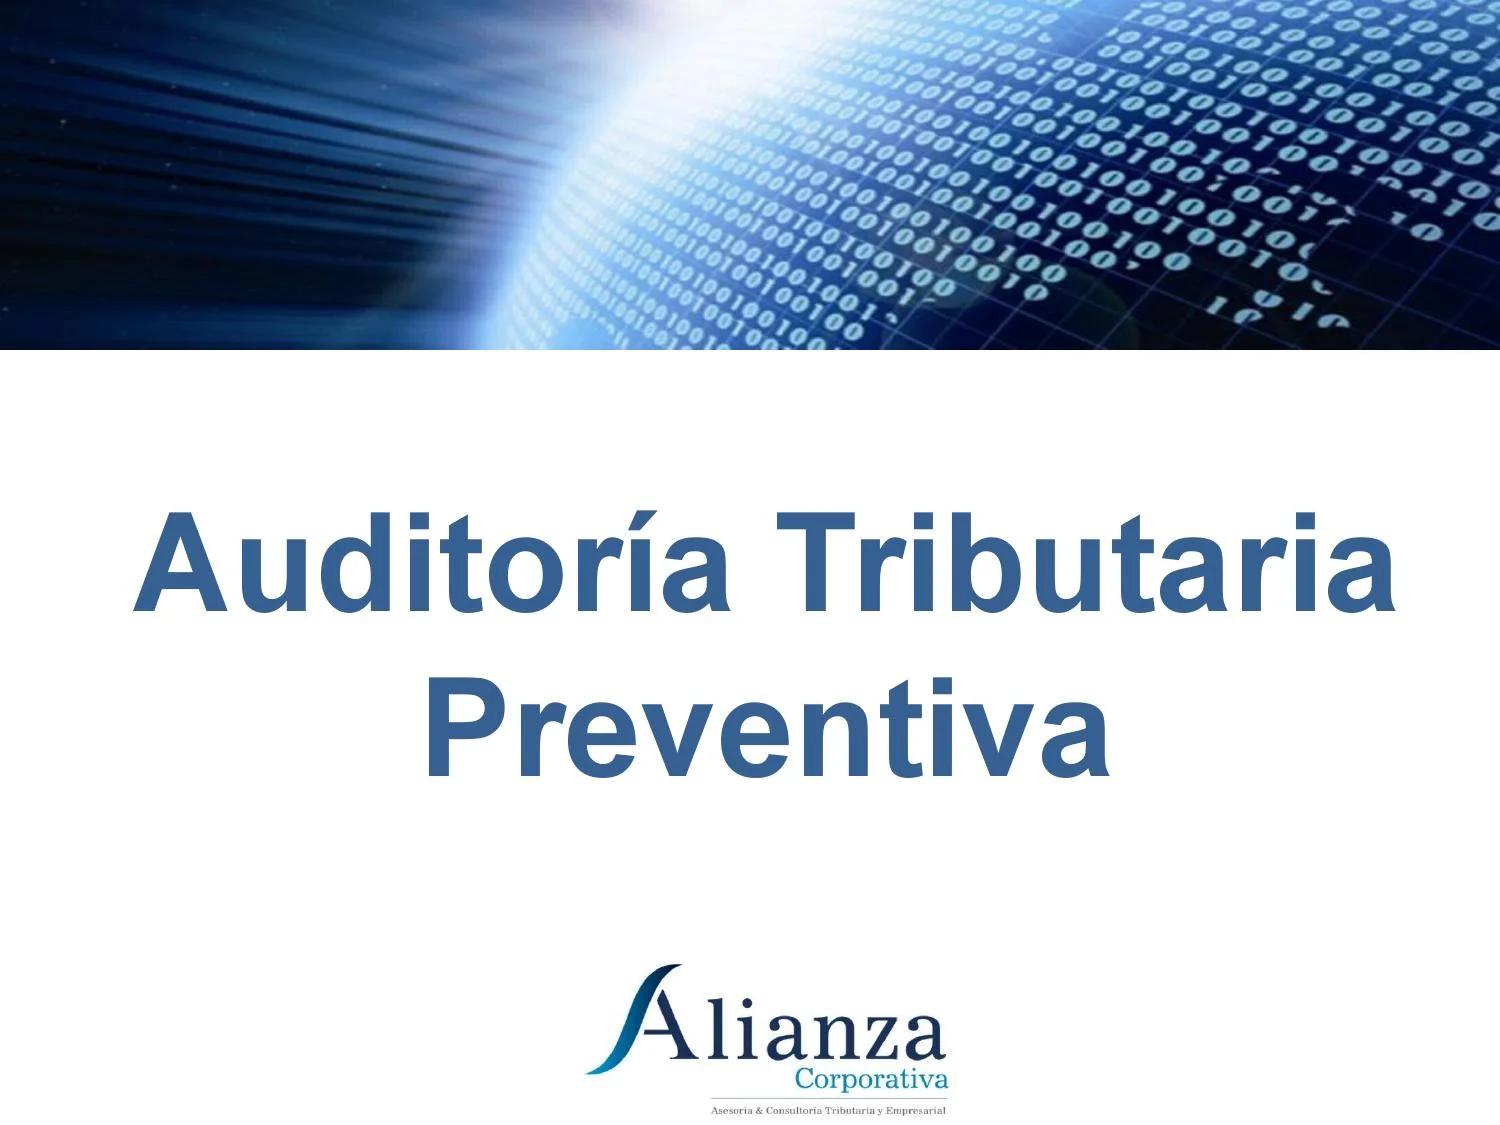 auditoria tributaria preventiva - Qué es una auditoría preventiva